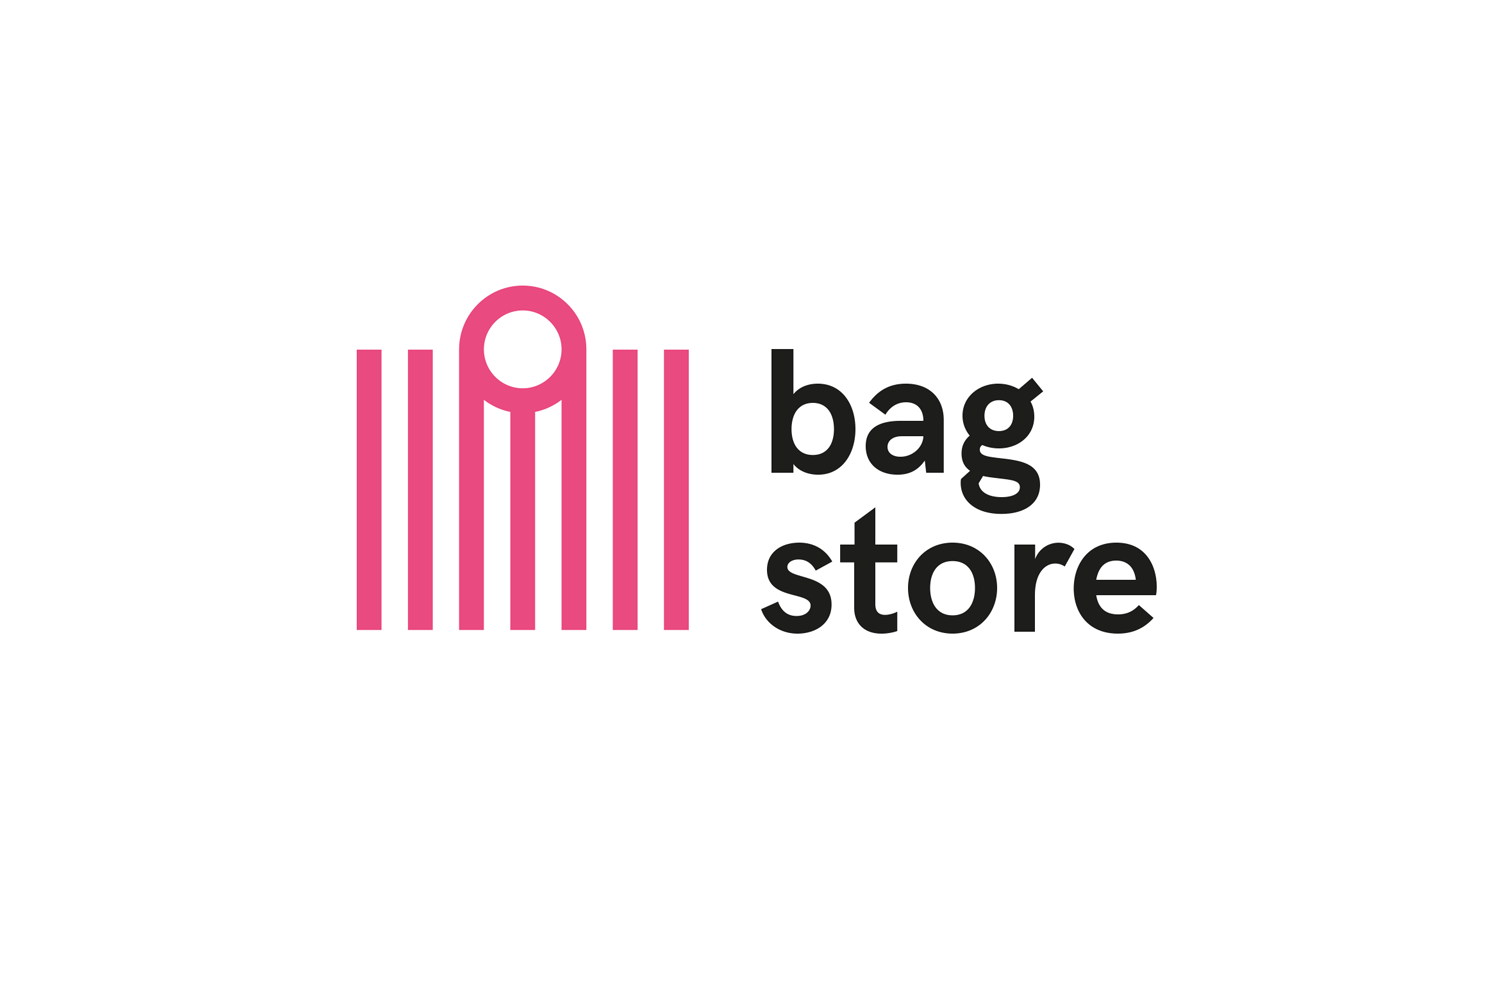 Bag Store Logo Template